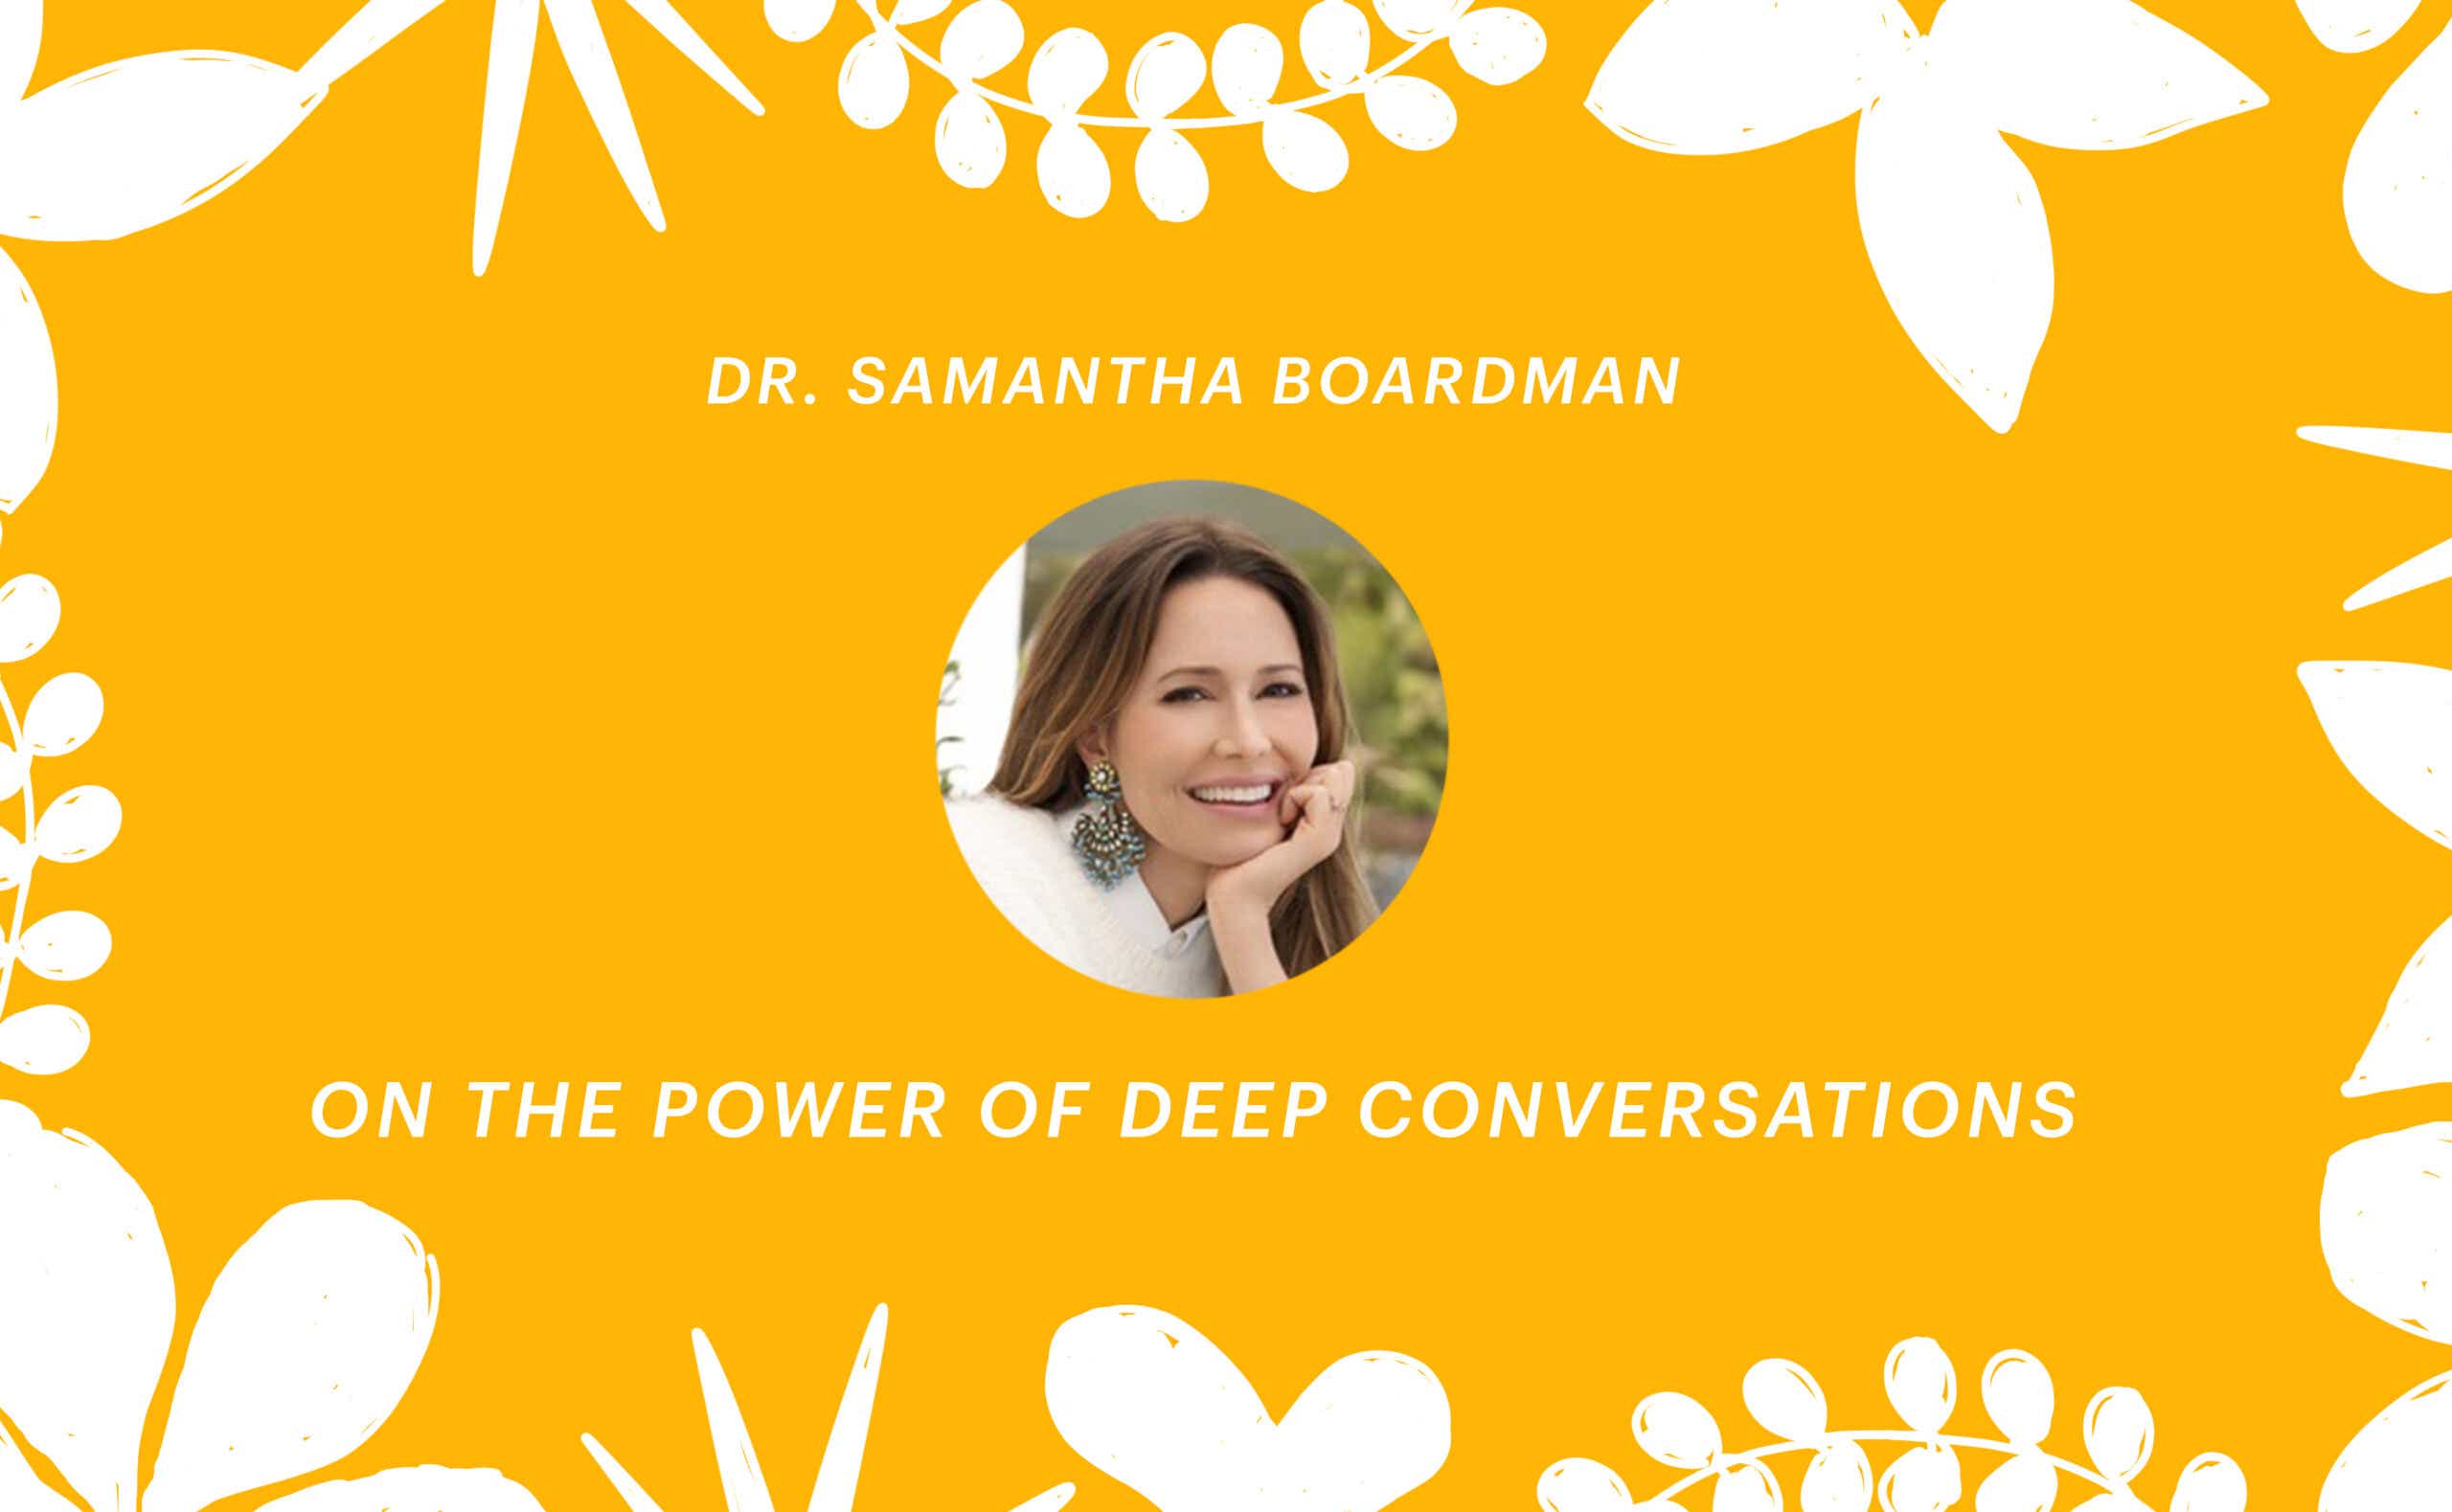 Dr. Samantha Boardman on the power of deep conversations